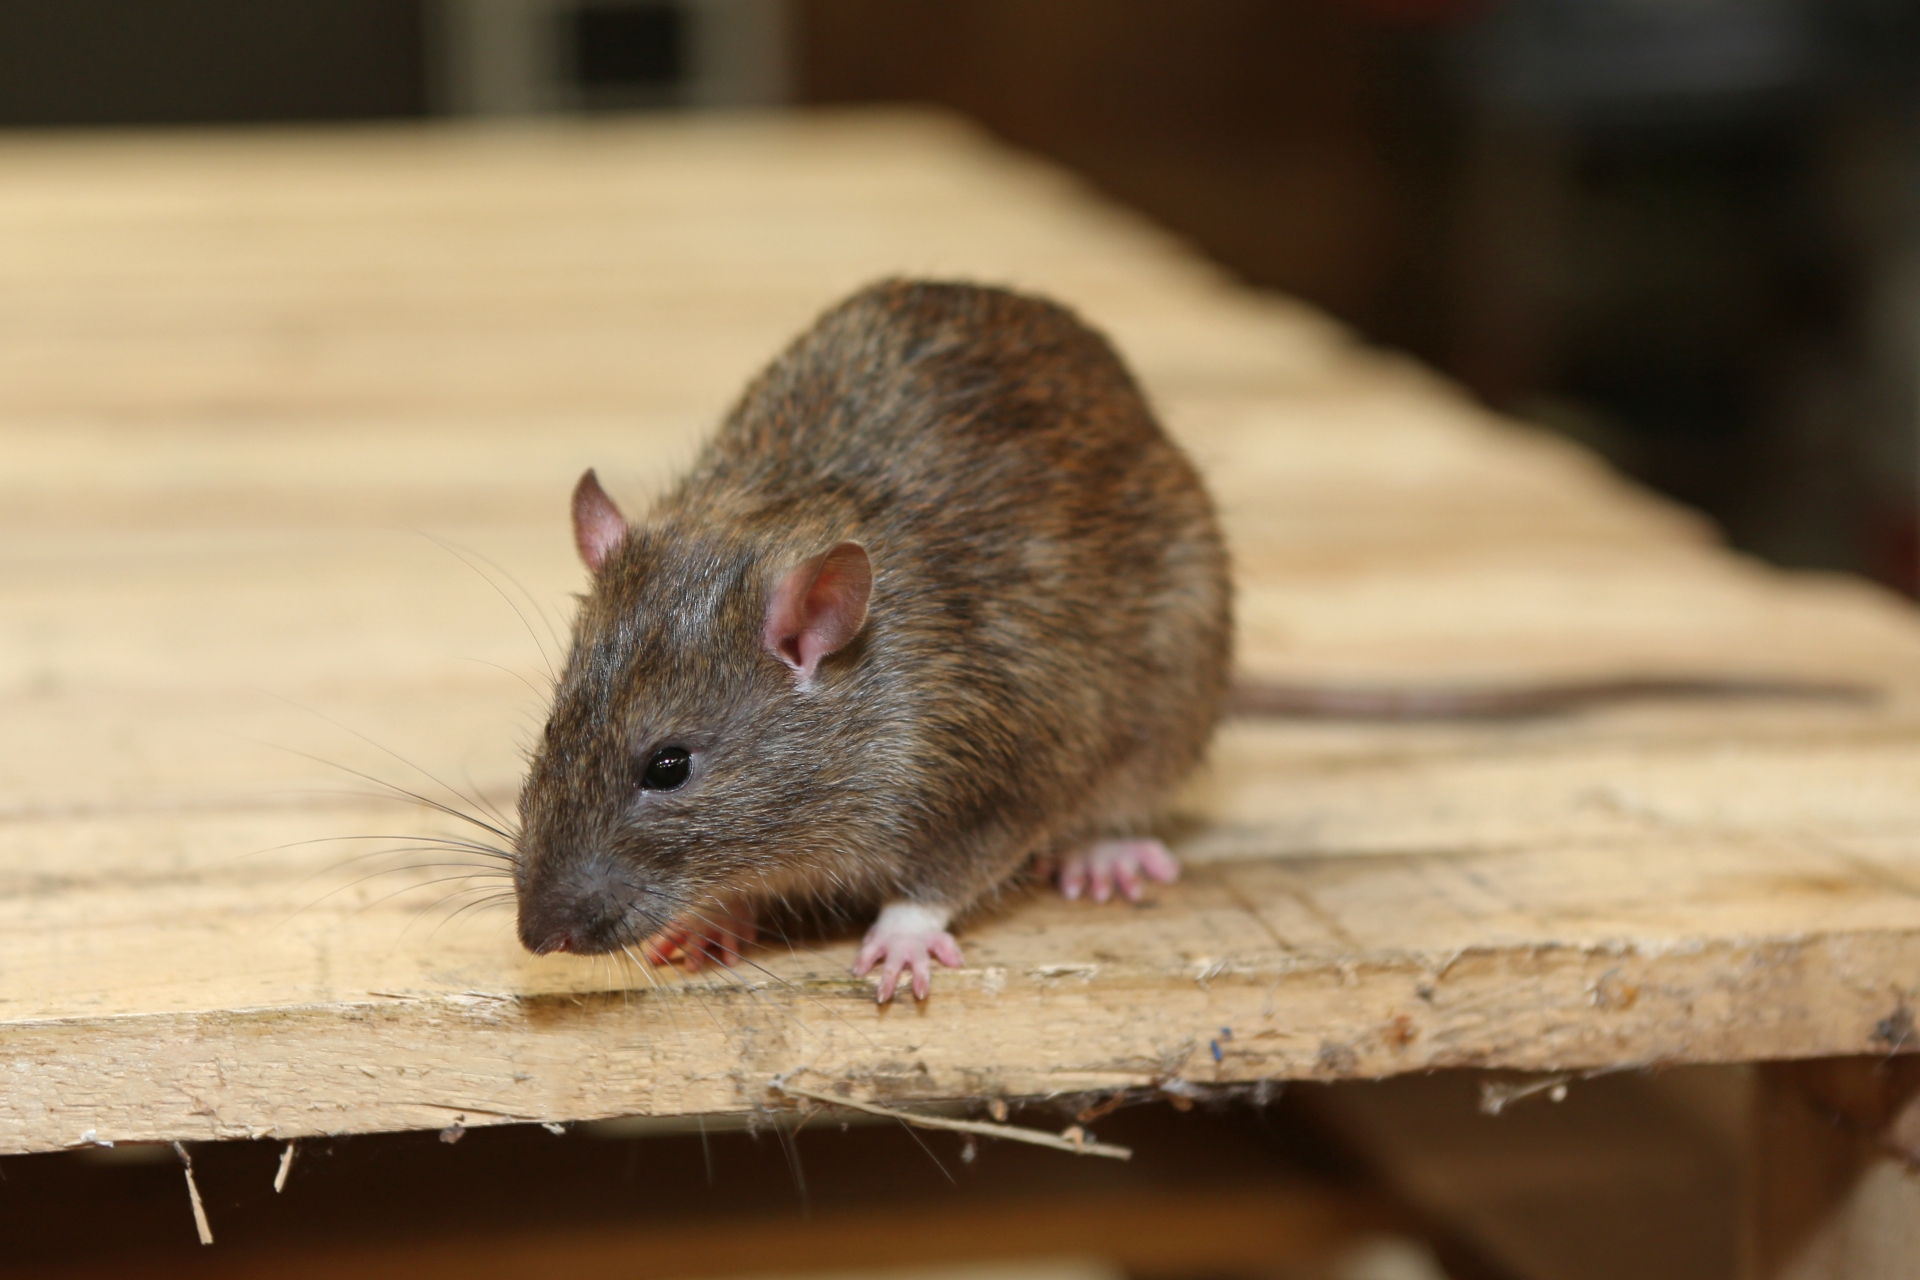 Rat Control, Pest Control in Roehampton, SW15. Call Now 020 8166 9746